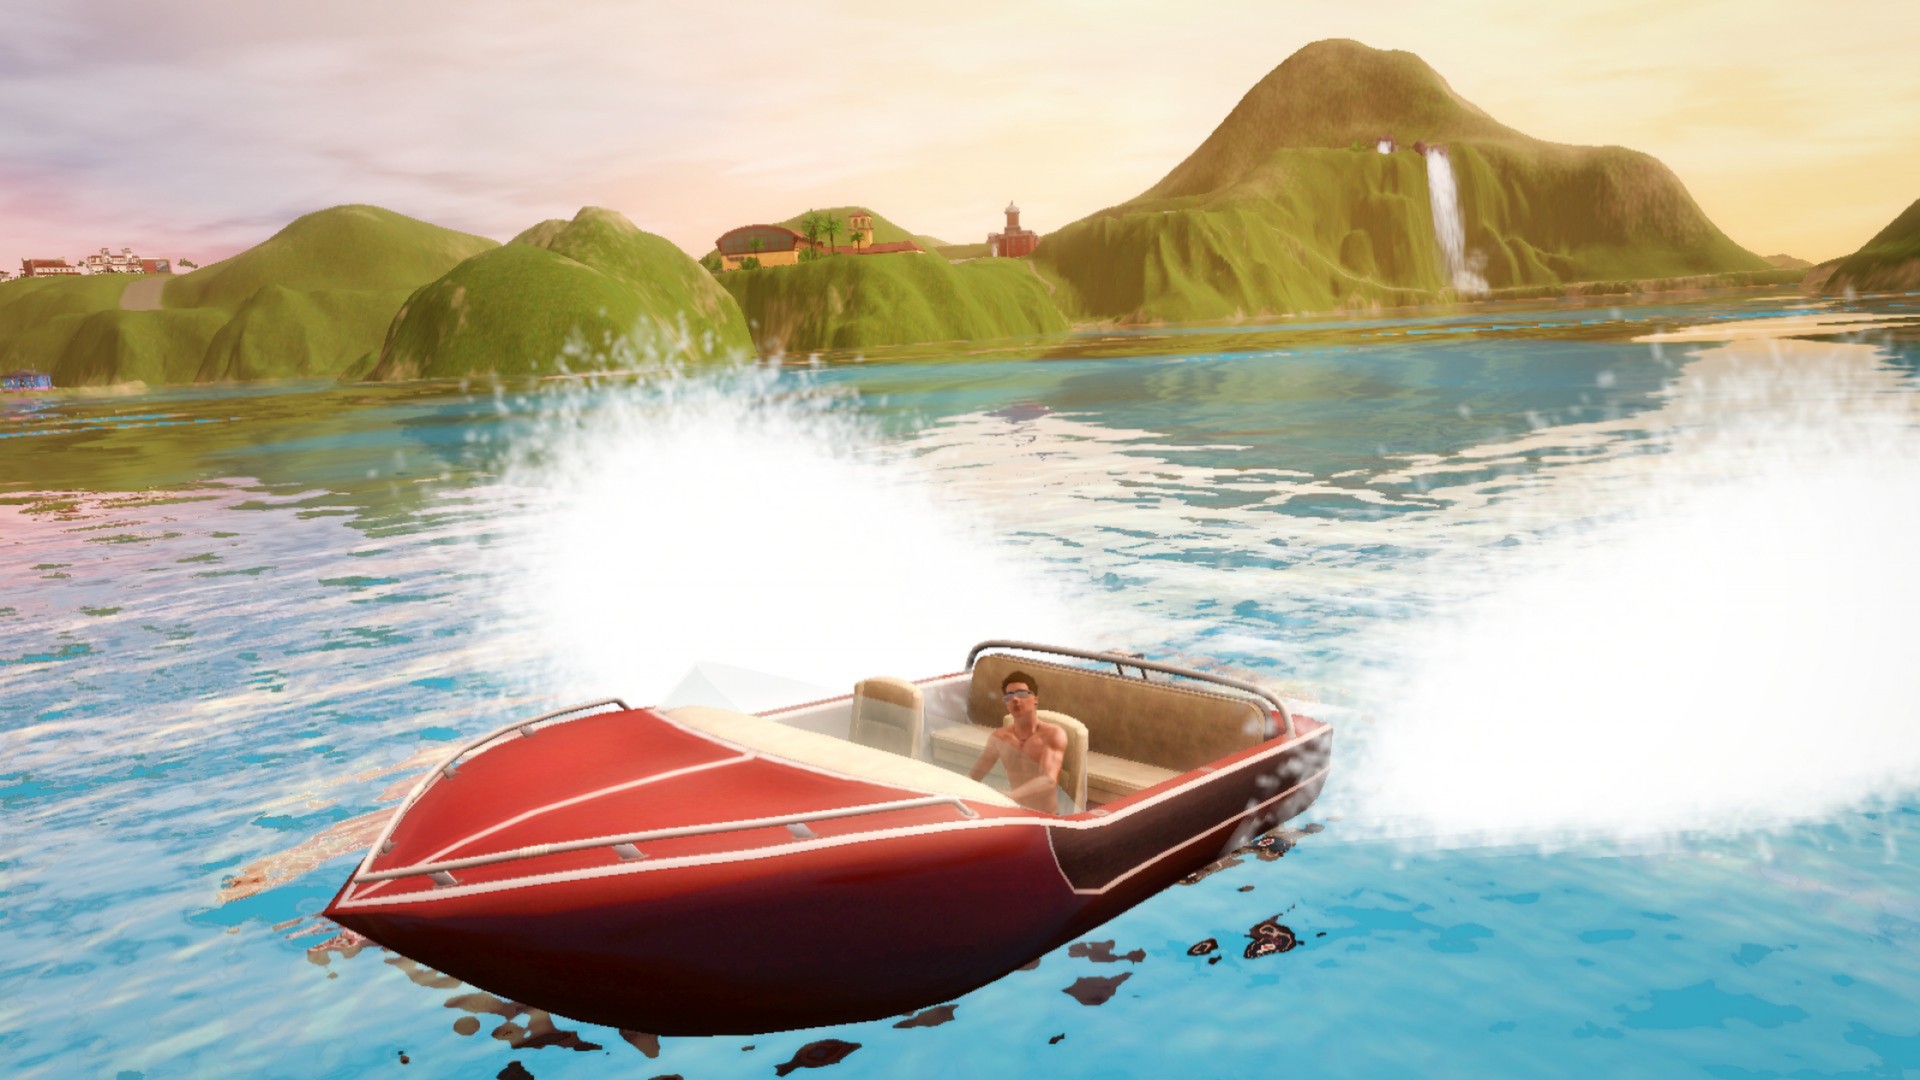 The Sims 3: Island Paradise on Steam